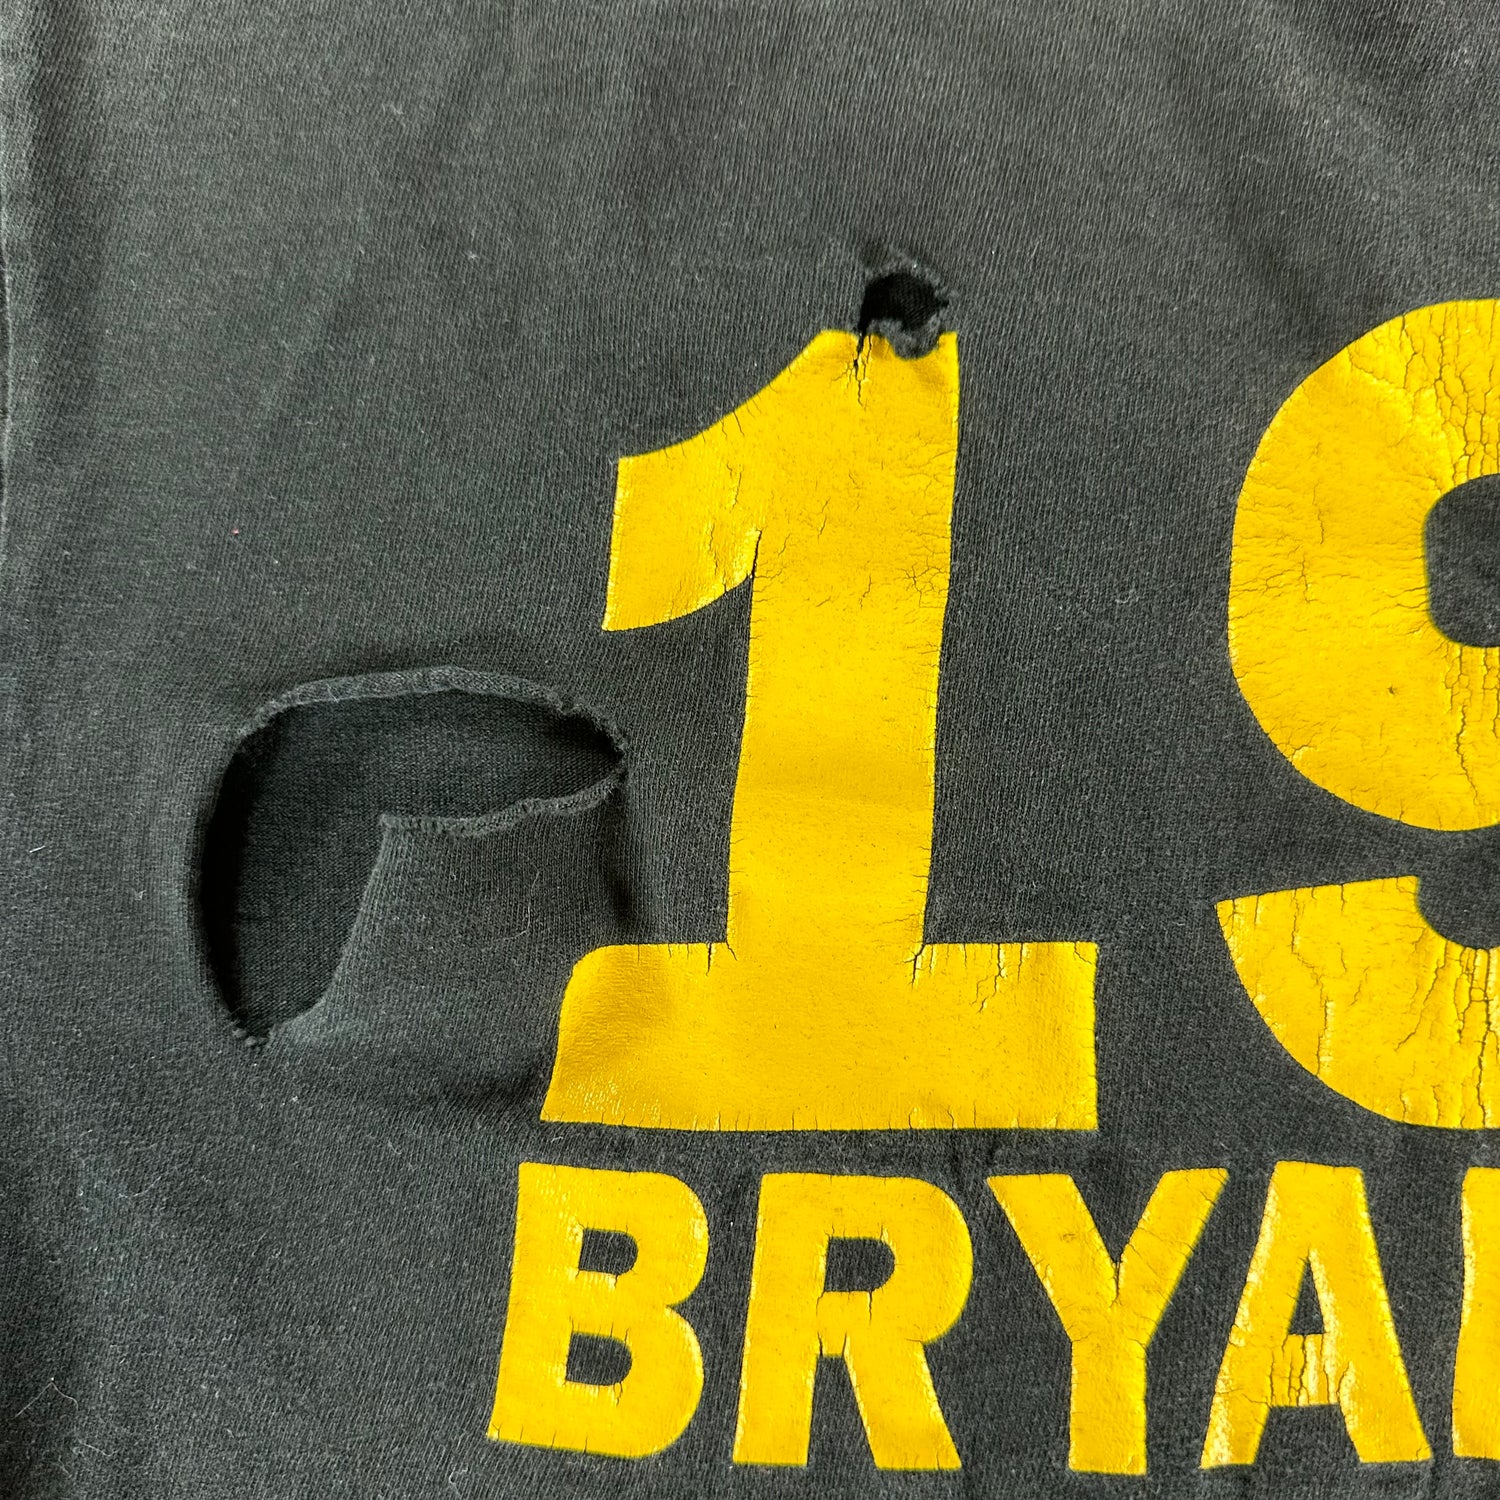 Vintage 1995 Bryan Adams T-shirt size XL